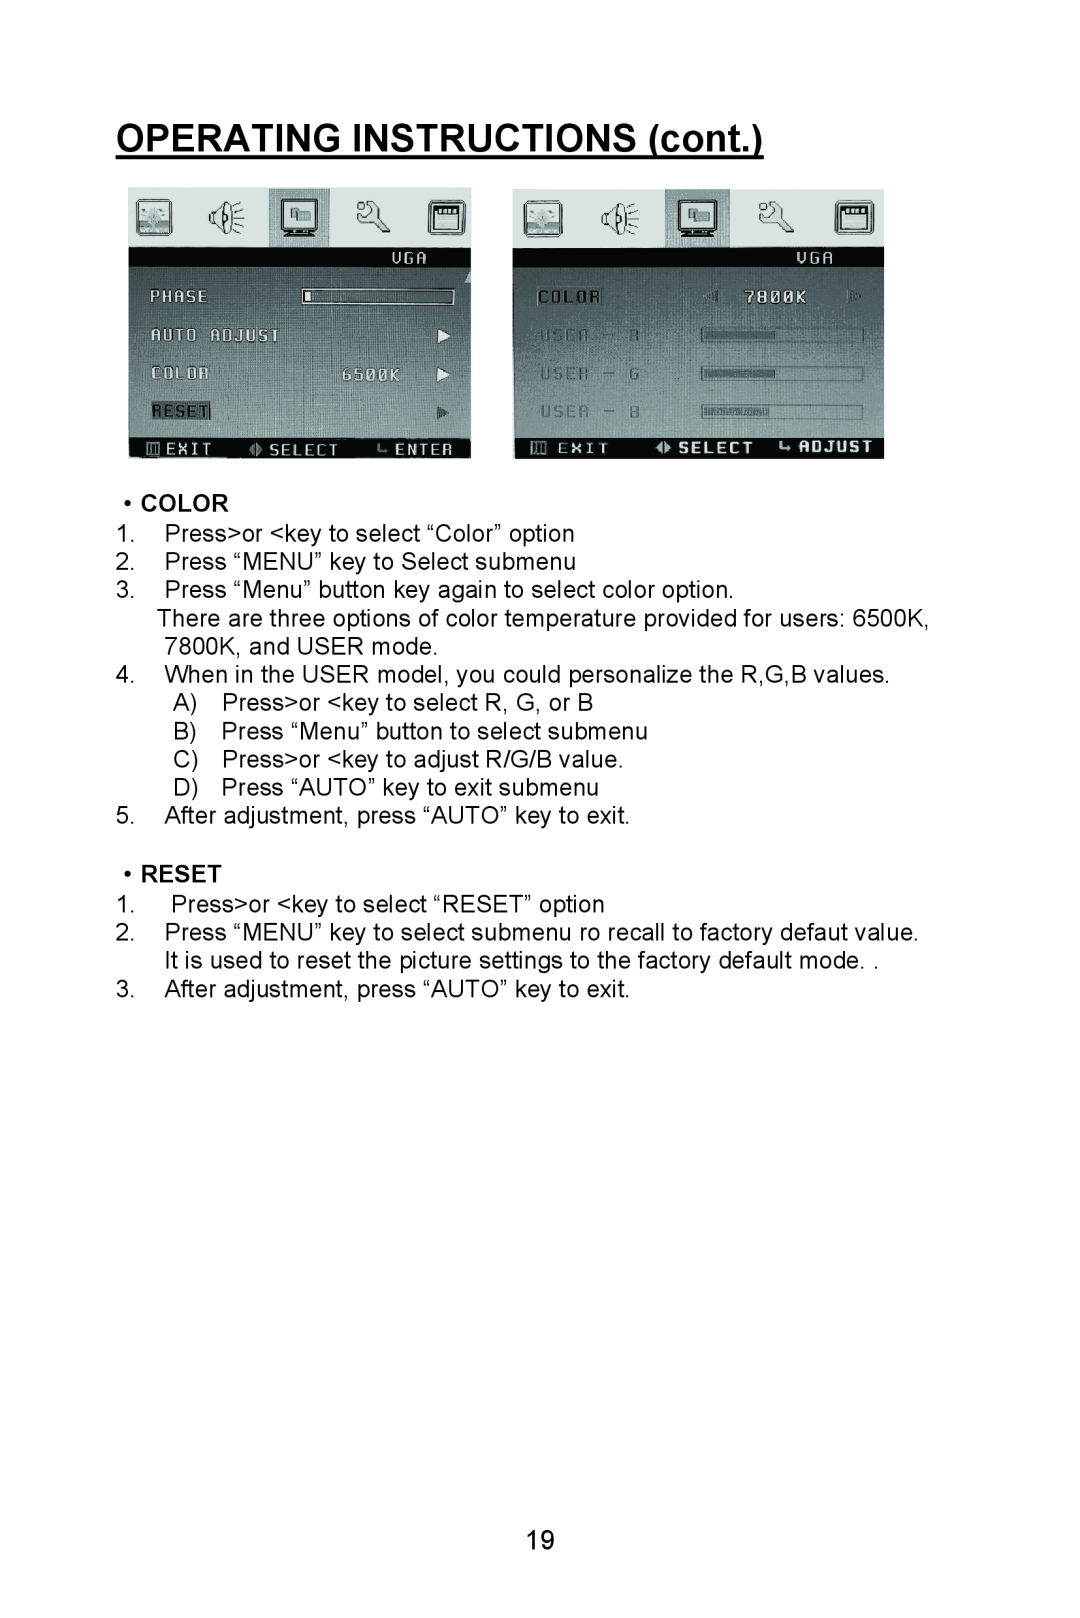 Planar PL1520M manual OPERATING INSTRUCTIONS cont, ·Color, ·Reset 